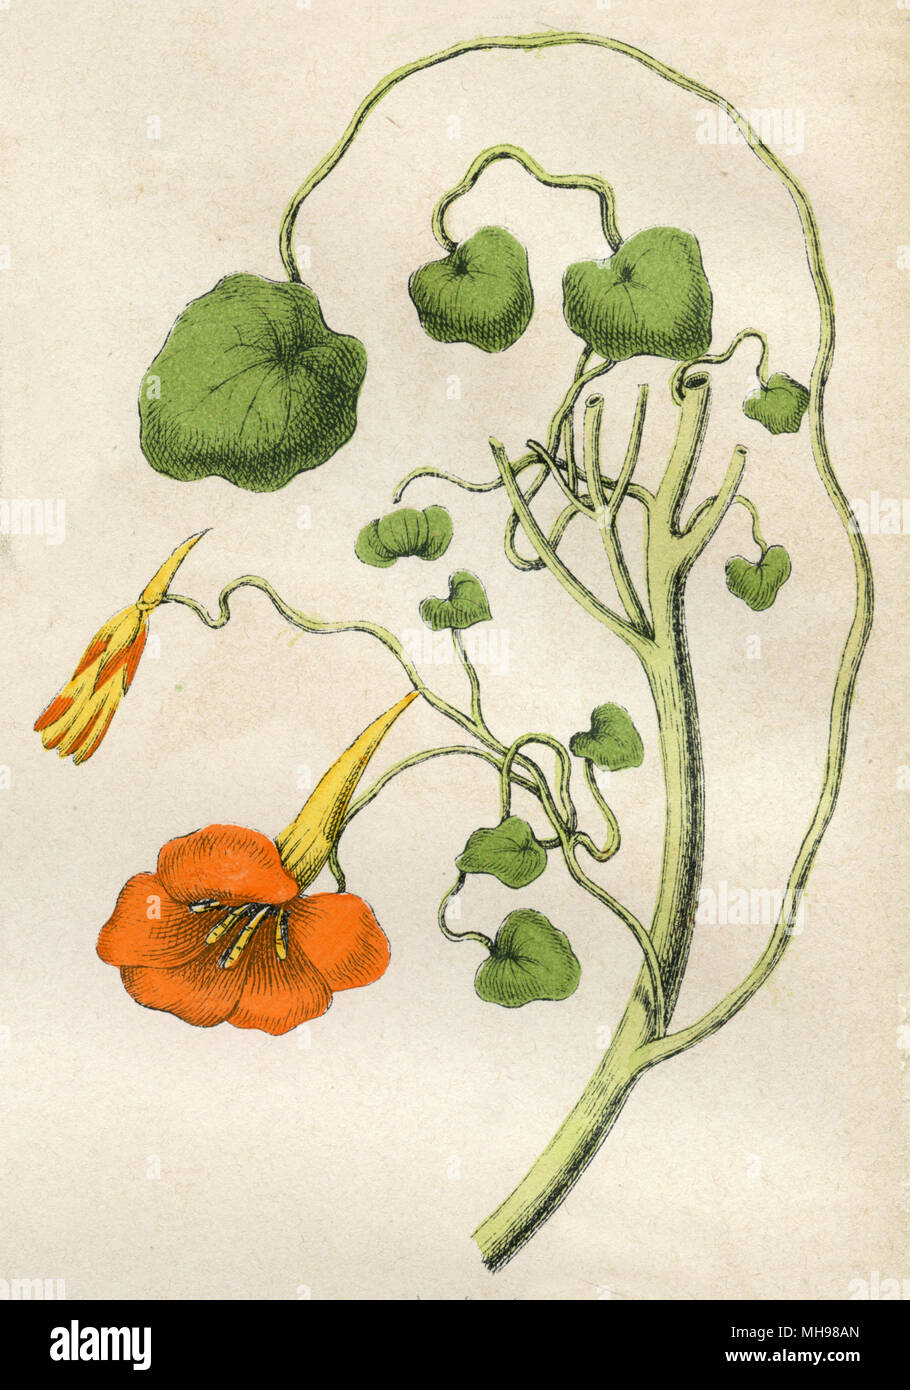 garden nasturtium, Indian cress or monks cress <Tropaeolum majus>, Stock Photo